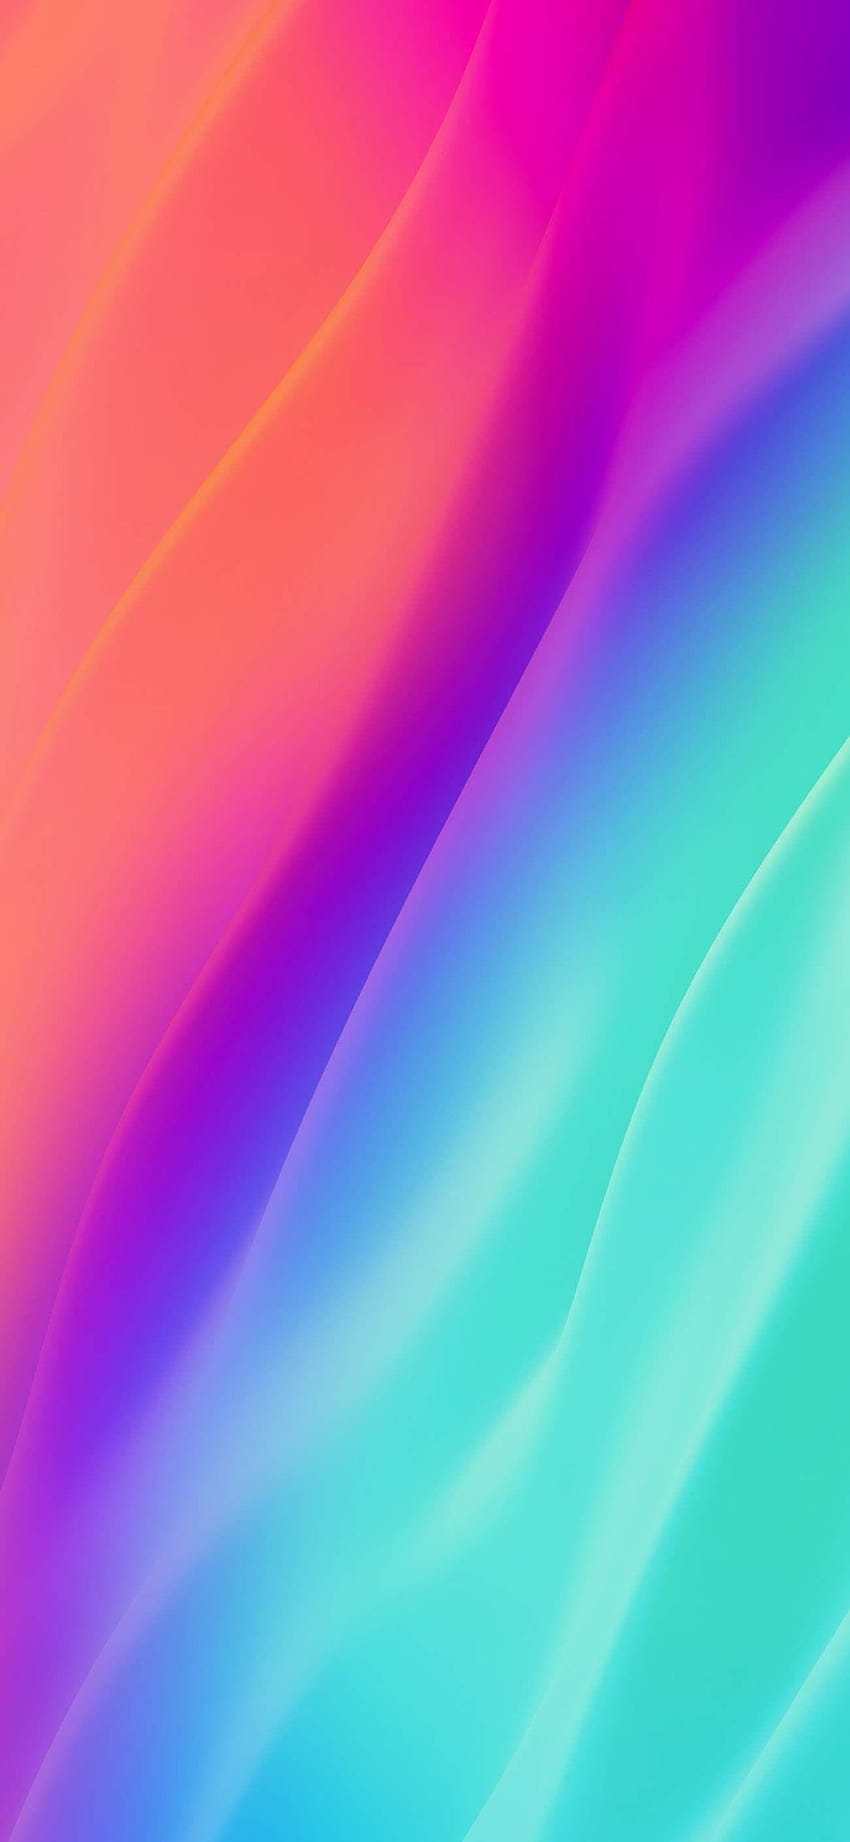 Iyan Sofyan on Abstract °Amoled °Liquid °Gradient in 2019, gradient rainbow HD phone wallpaper